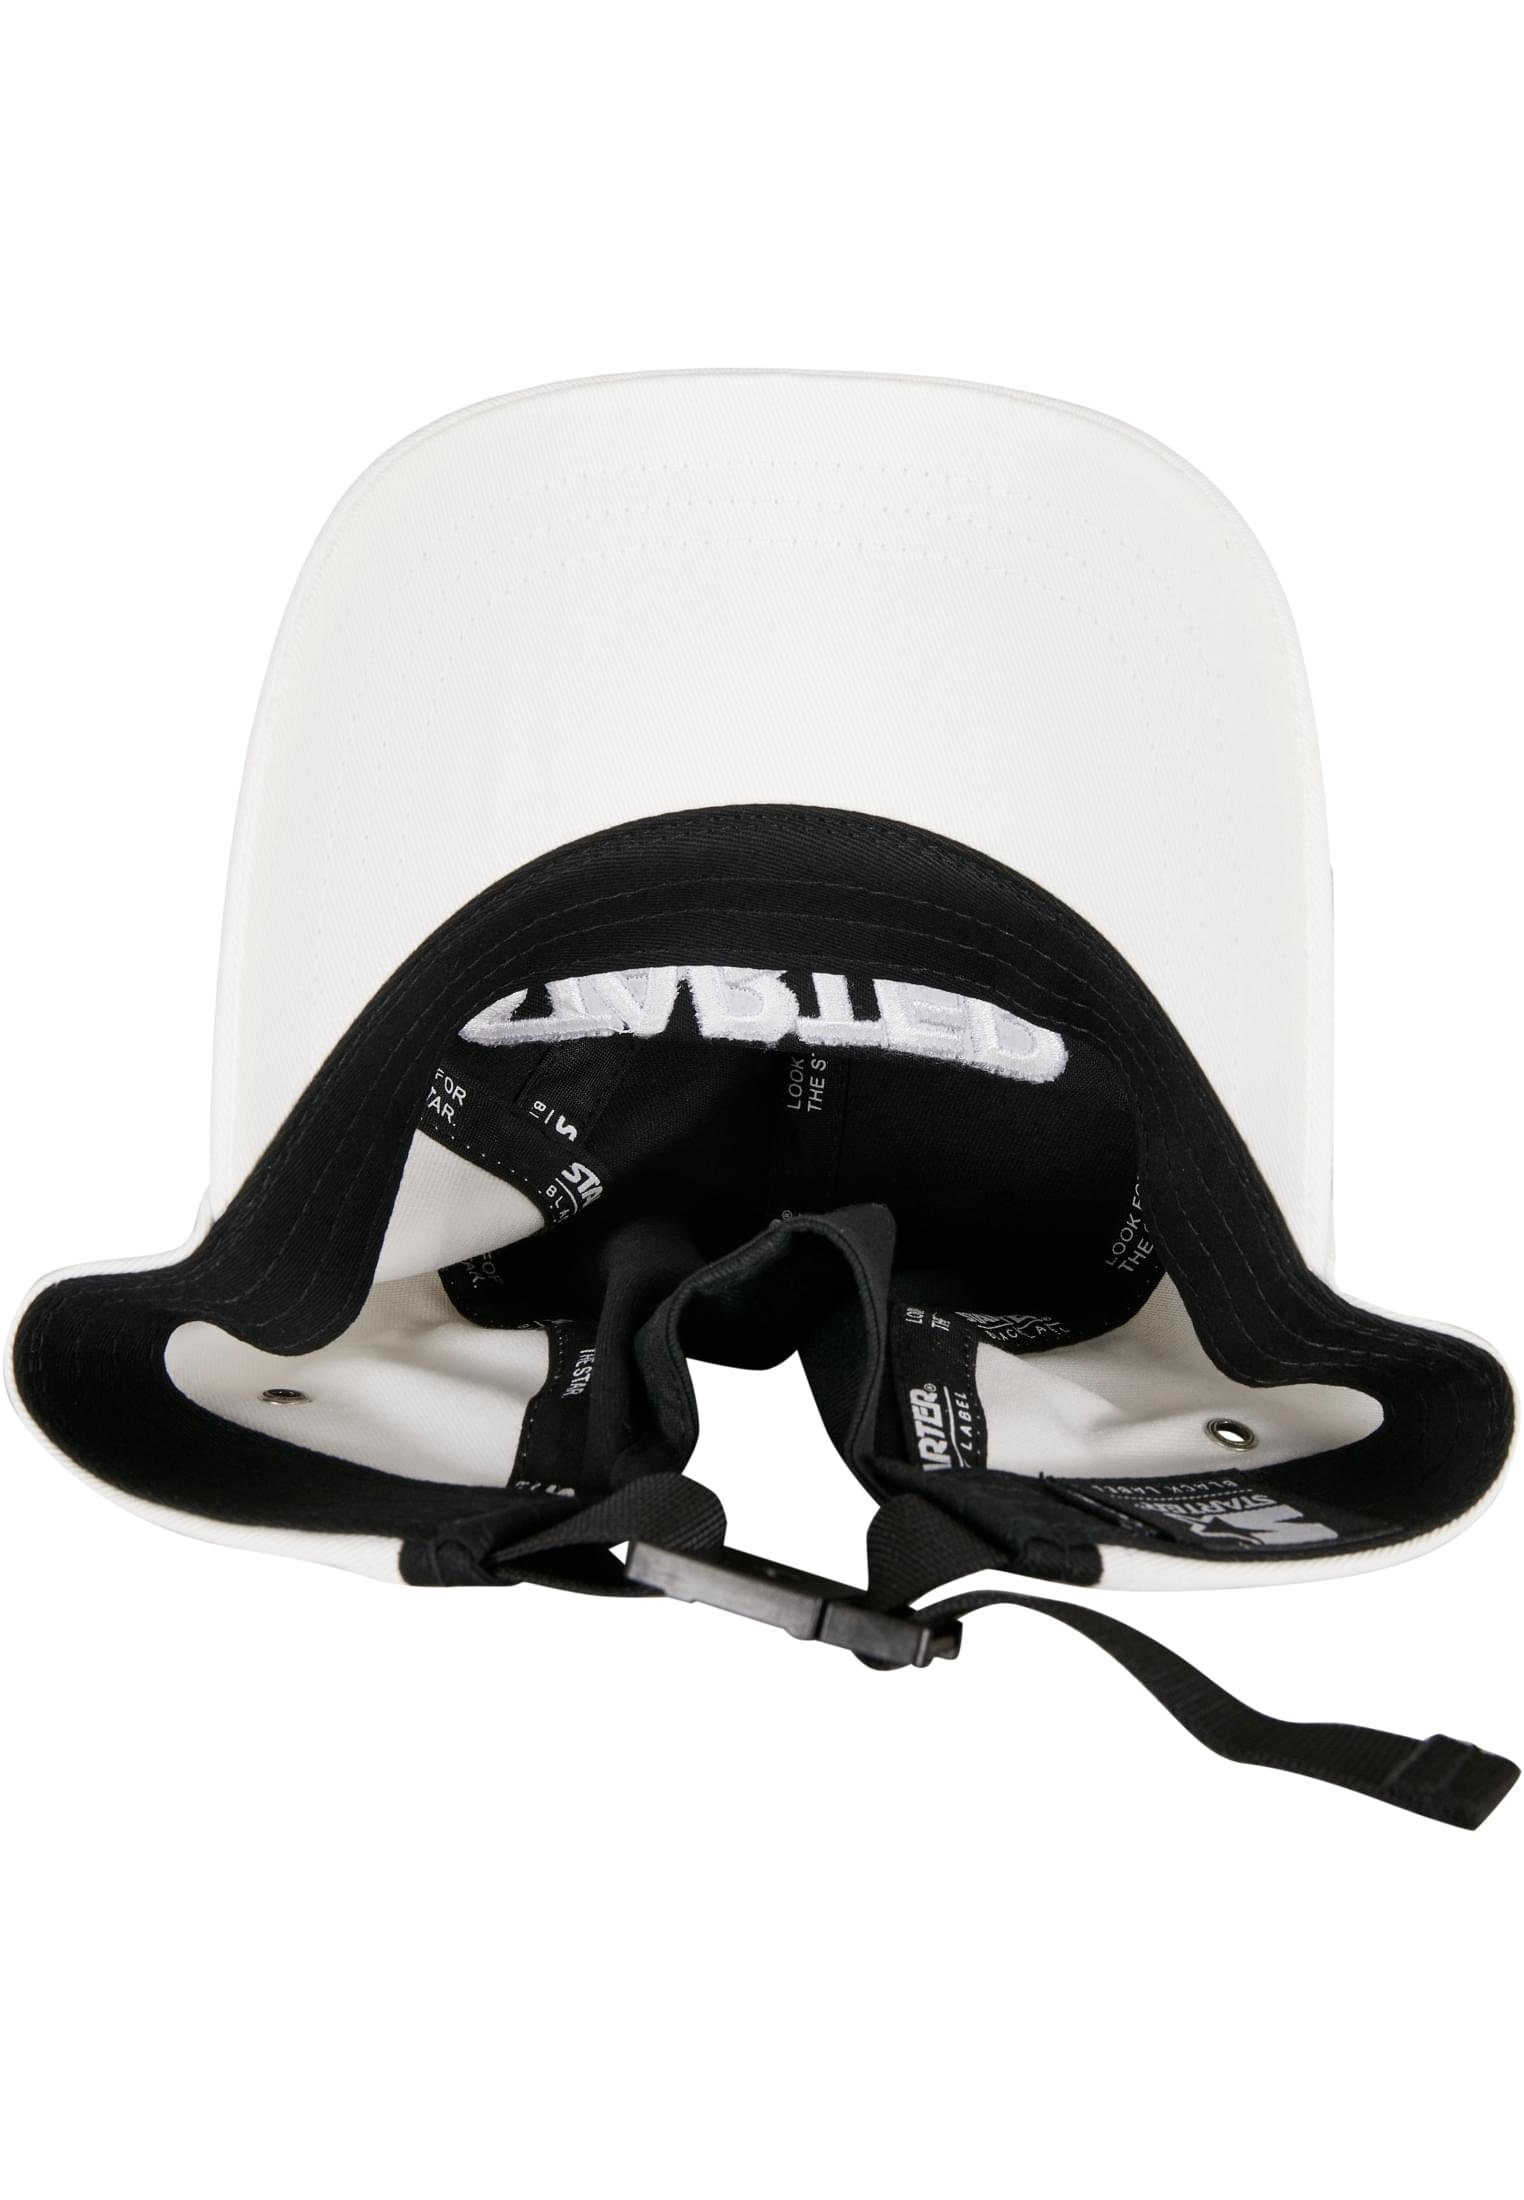 Cap black/white Black Fresh Snapback Label Starter Accessoires Jockey Cap